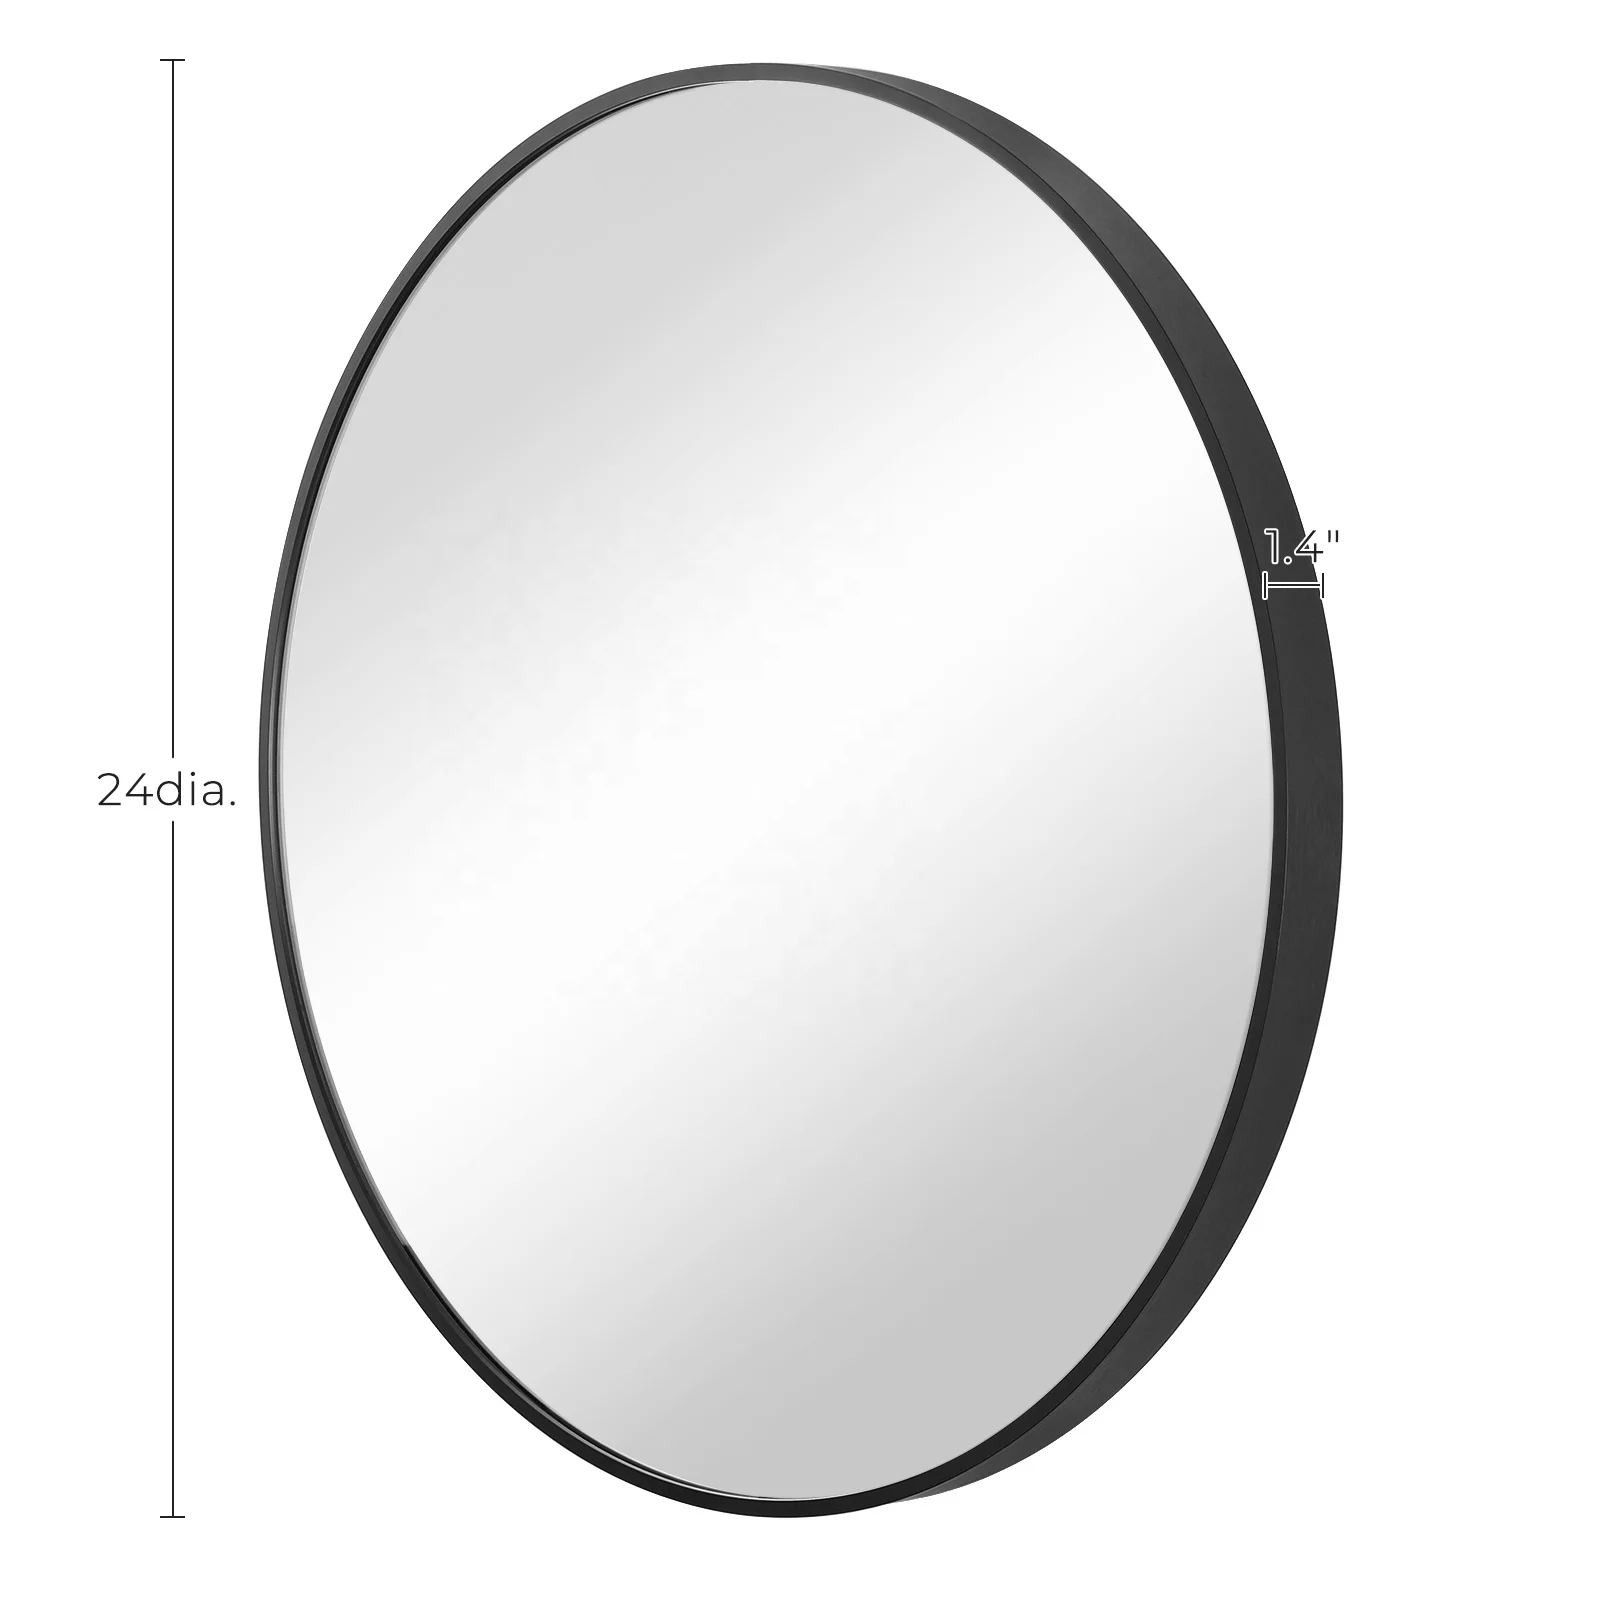 SONGMICS  wholesale Decorative round mirror aluminum alloy frame wall mirror for living room bathroom bedroom